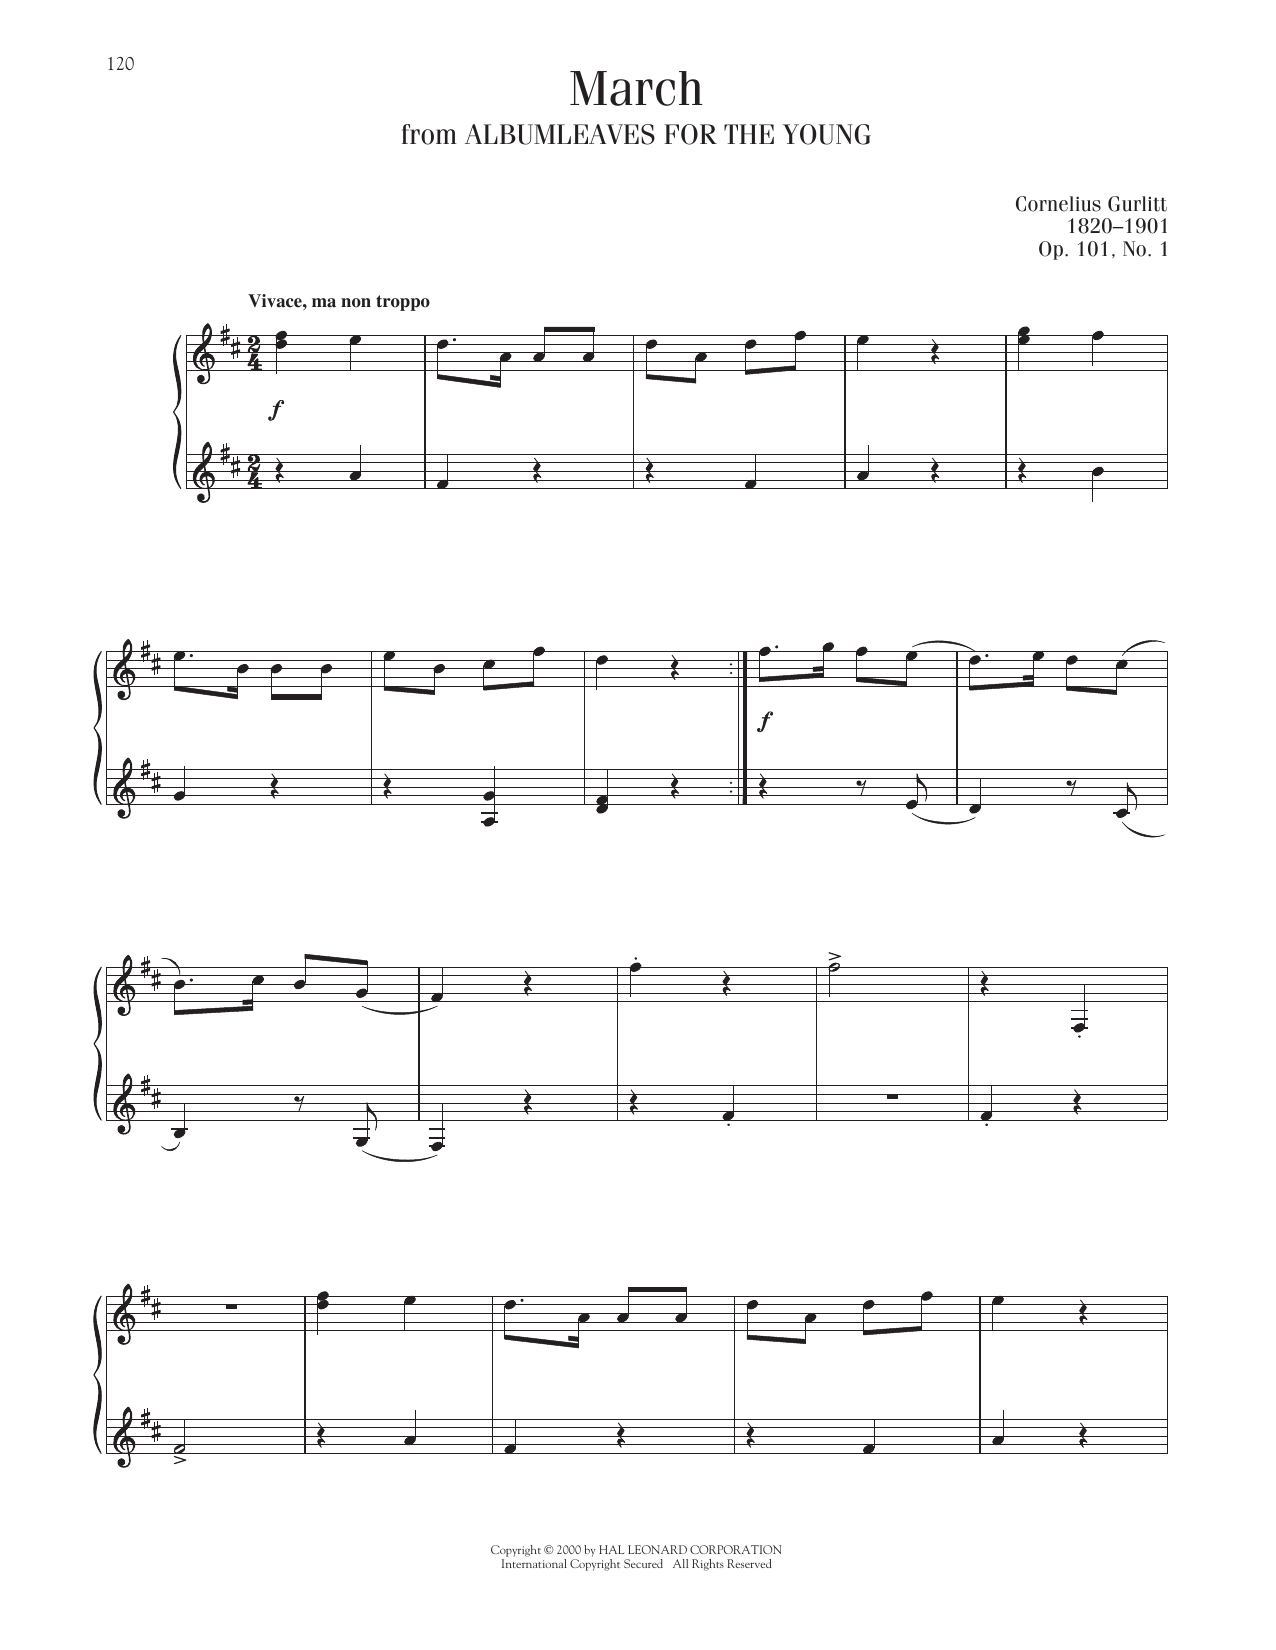 Cornelius Gurlitt March, Op. 101, No. 1 sheet music notes printable PDF score